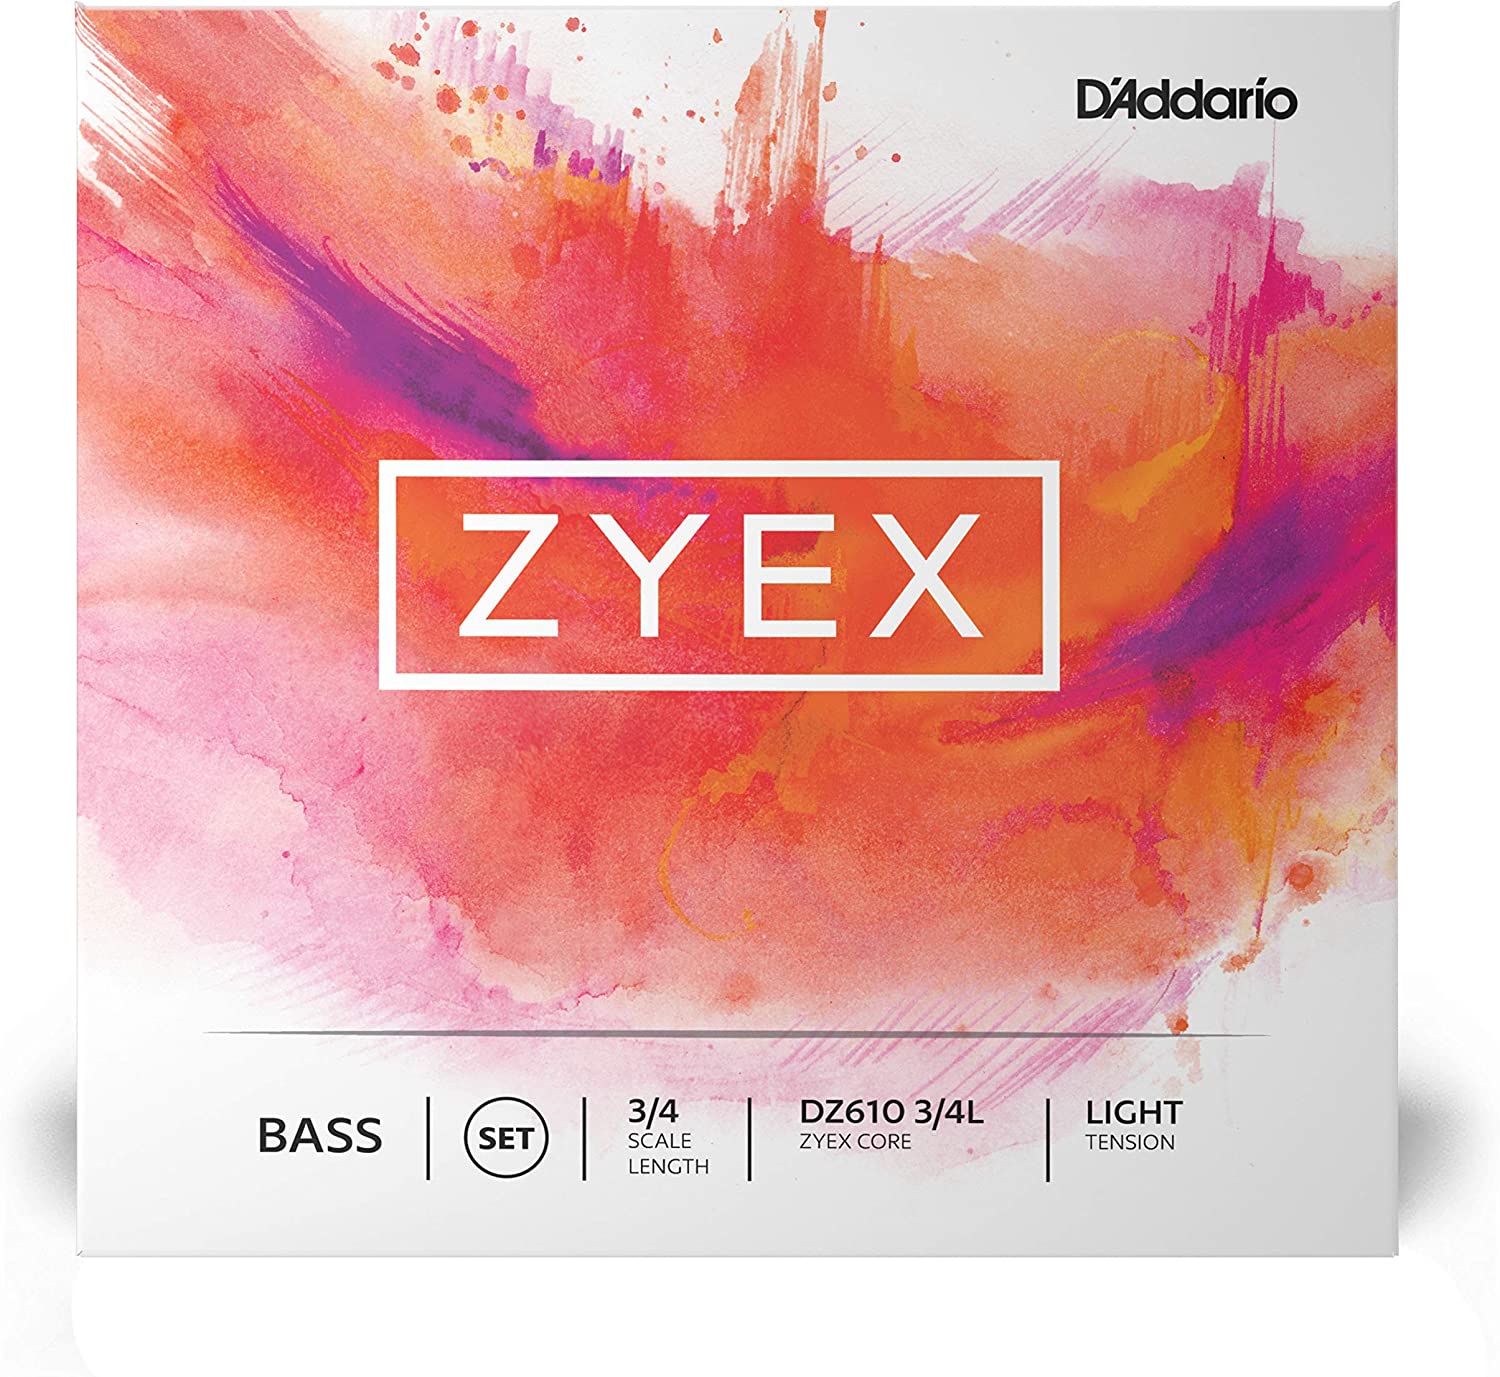 D'Addario Zyex Bass String Set on a white background